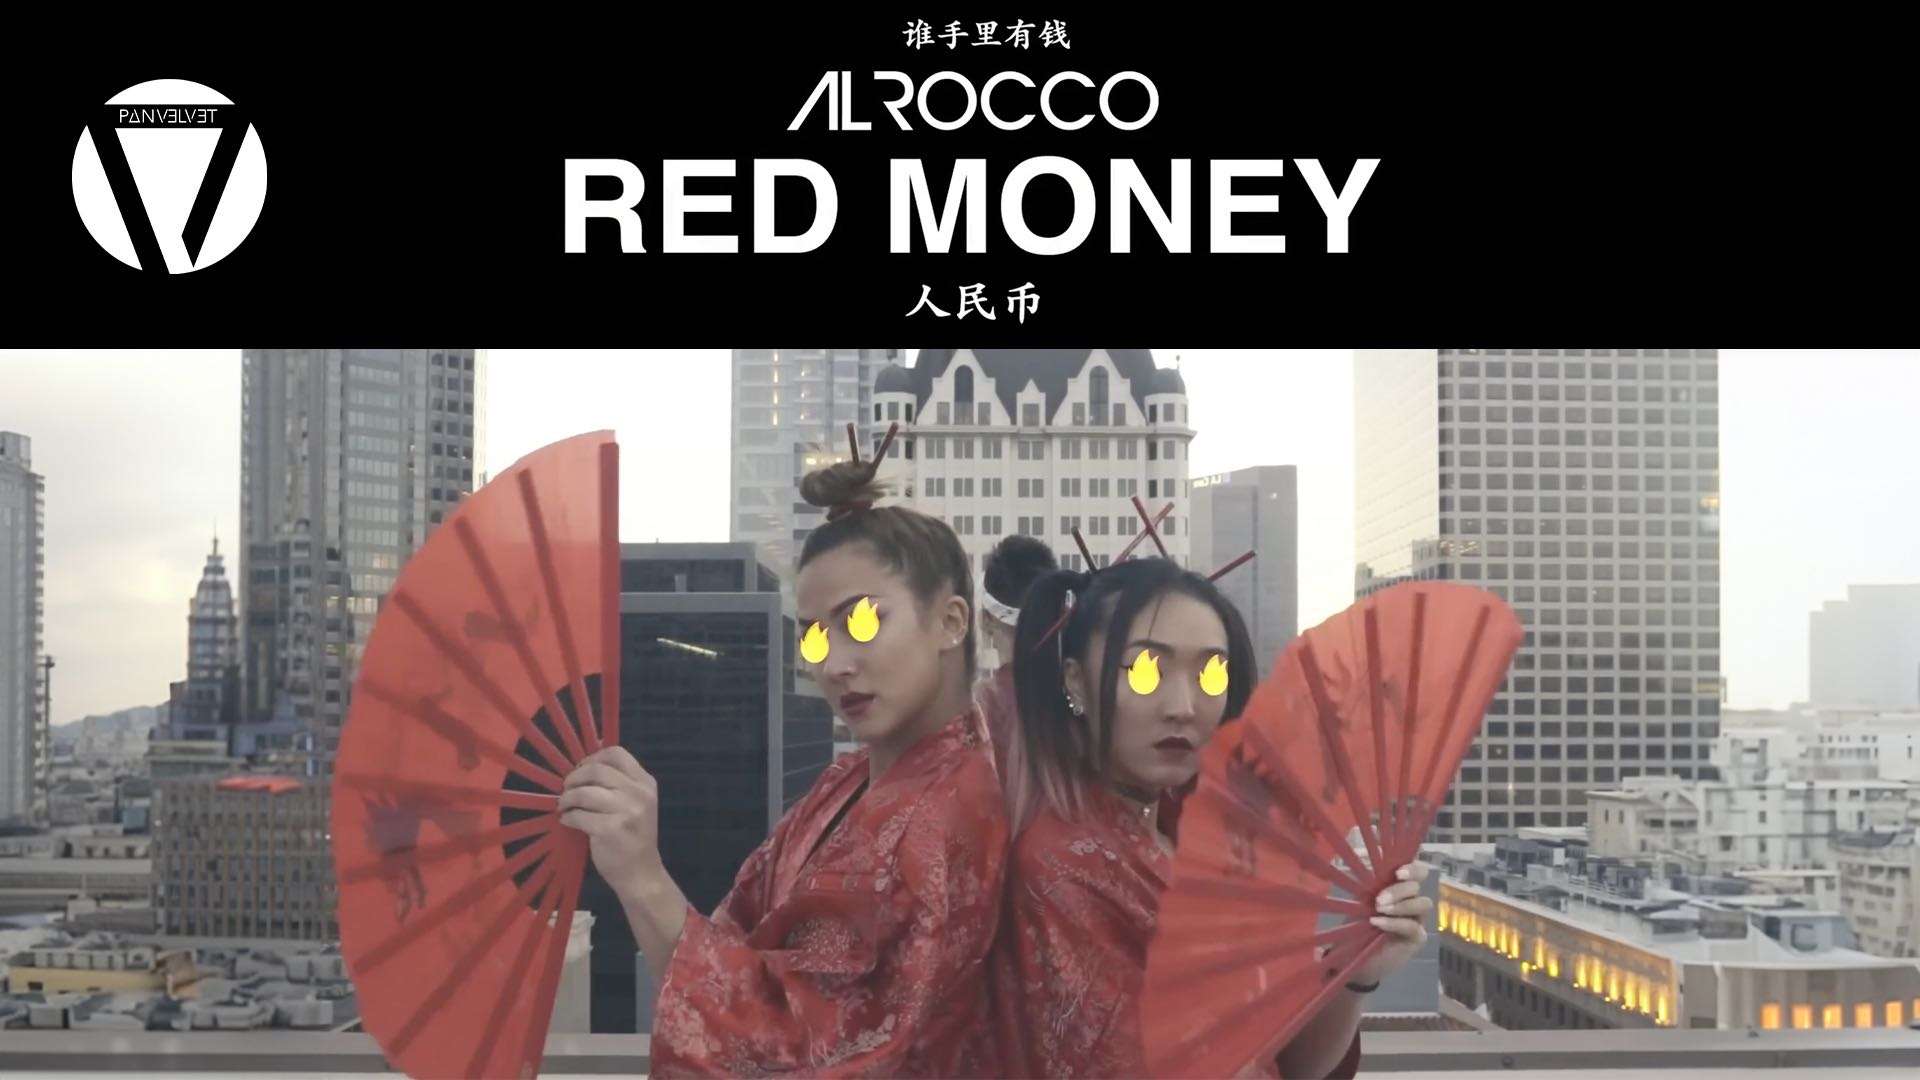 Al Rocco - Red Money 人民币 2017  MV